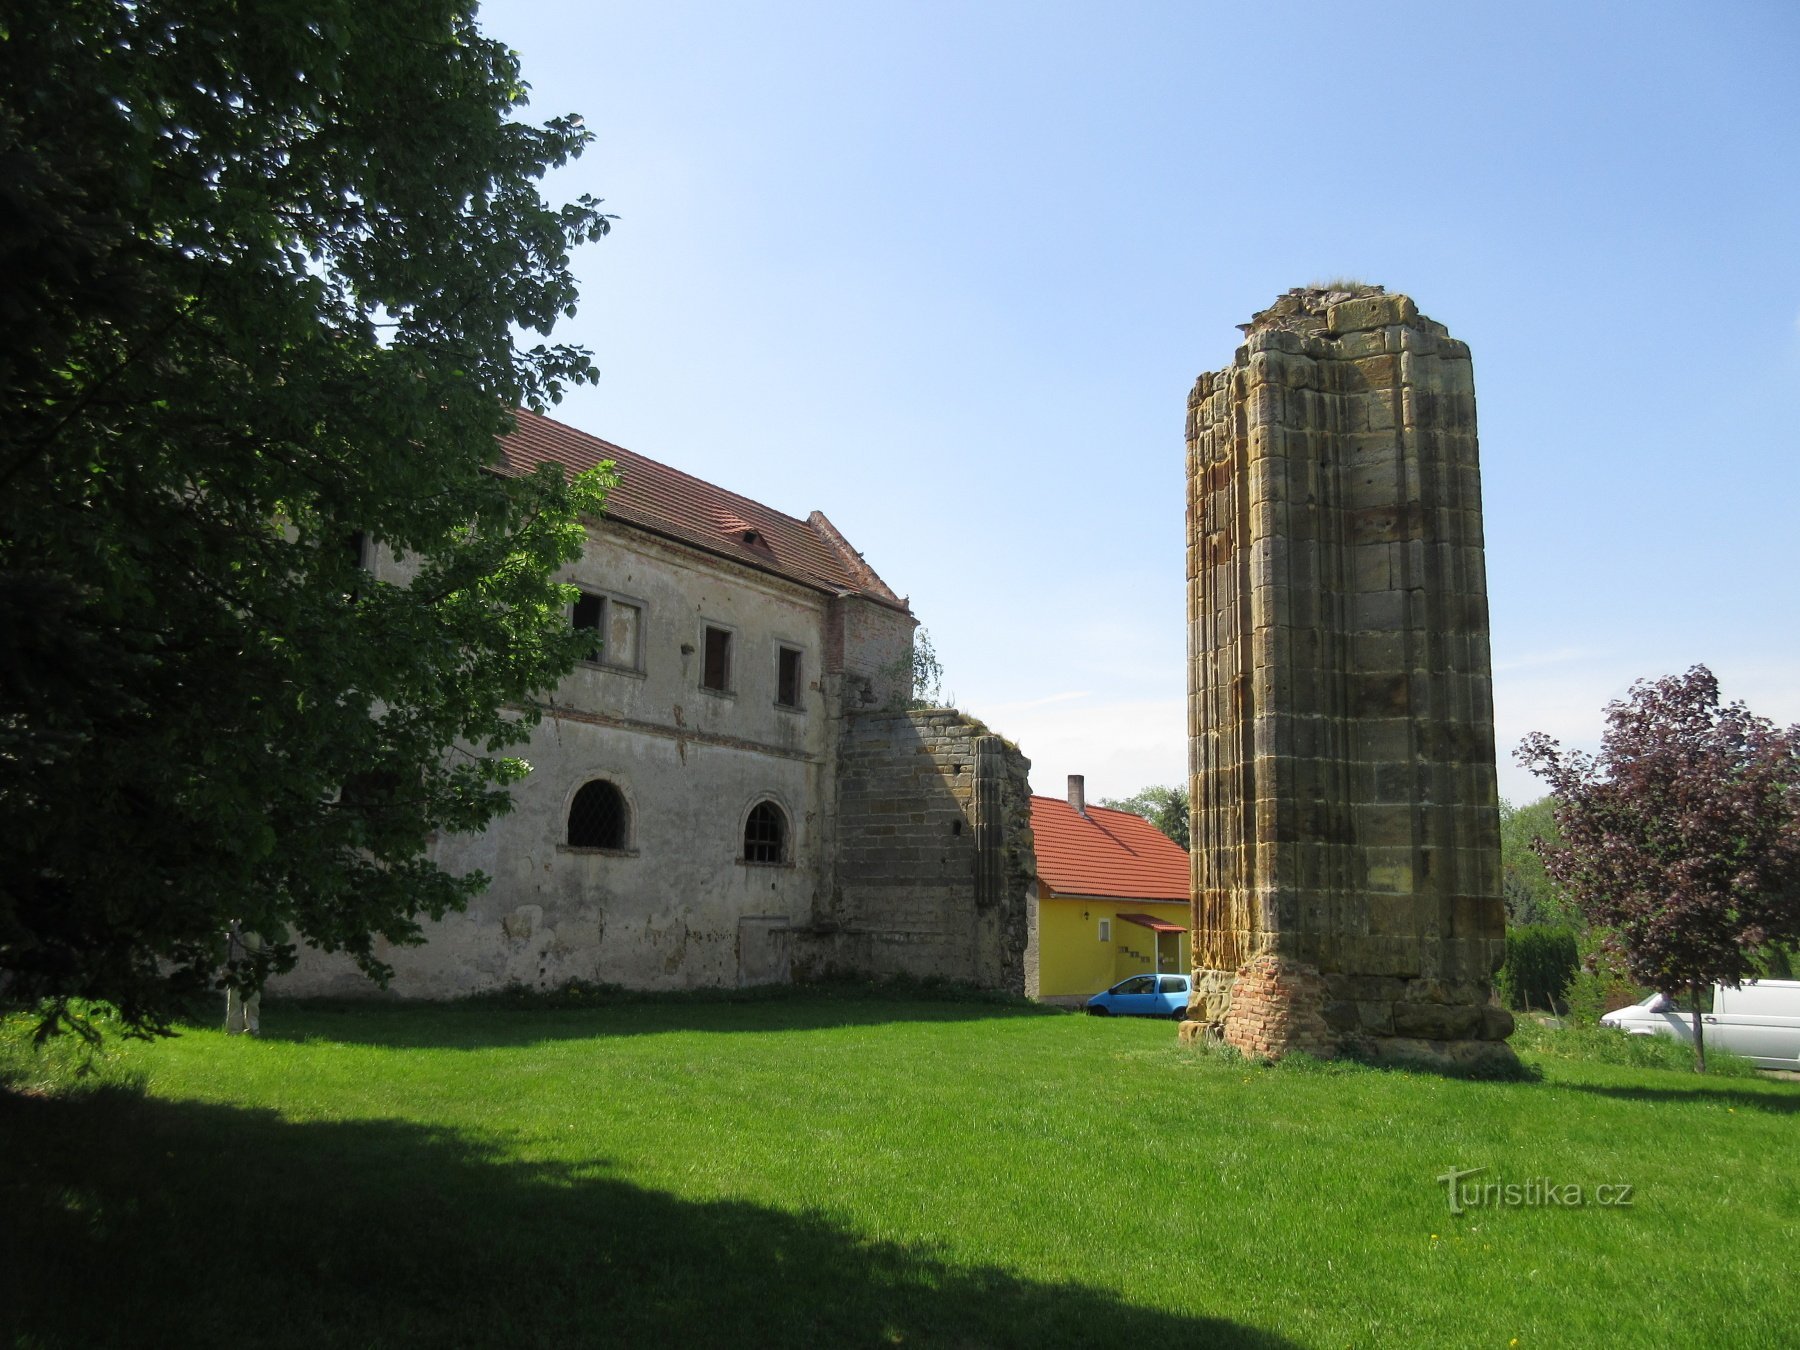 Klášterní Skalice - as ruínas de um mosteiro